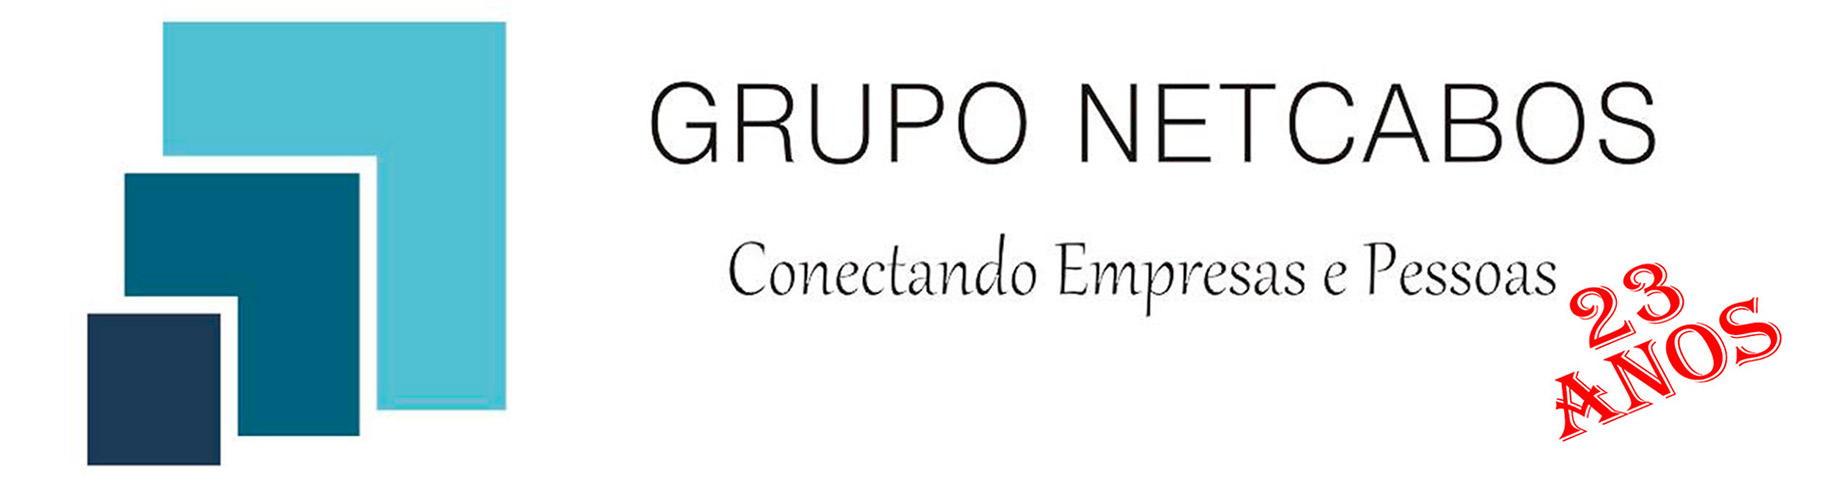 Gruponetcabos